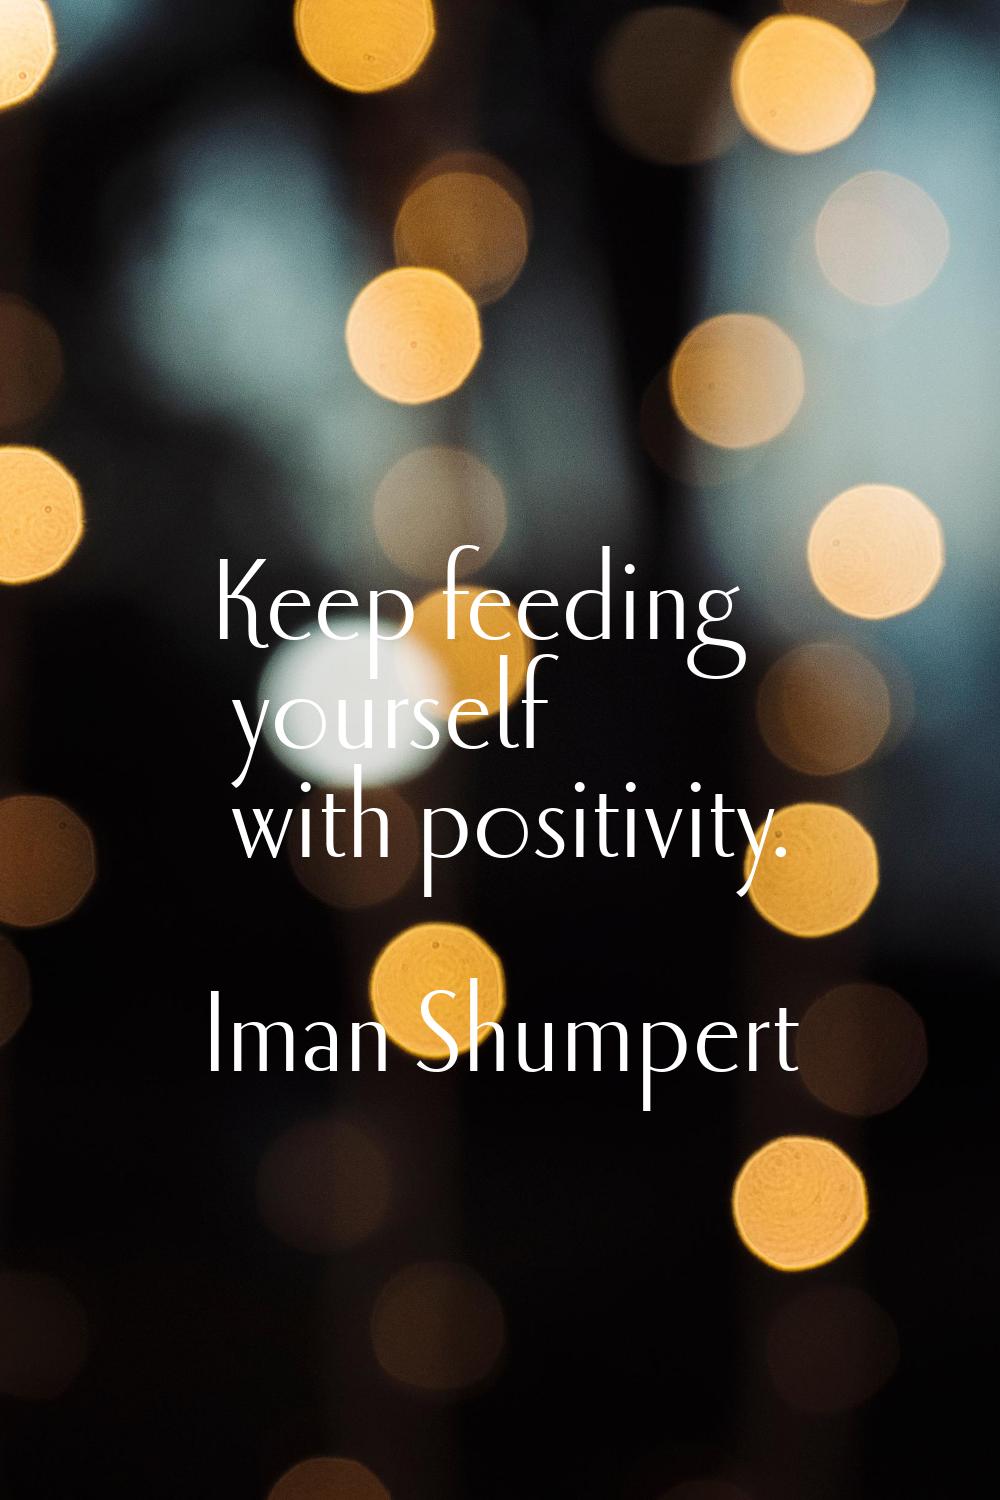 Keep feeding yourself with positivity.